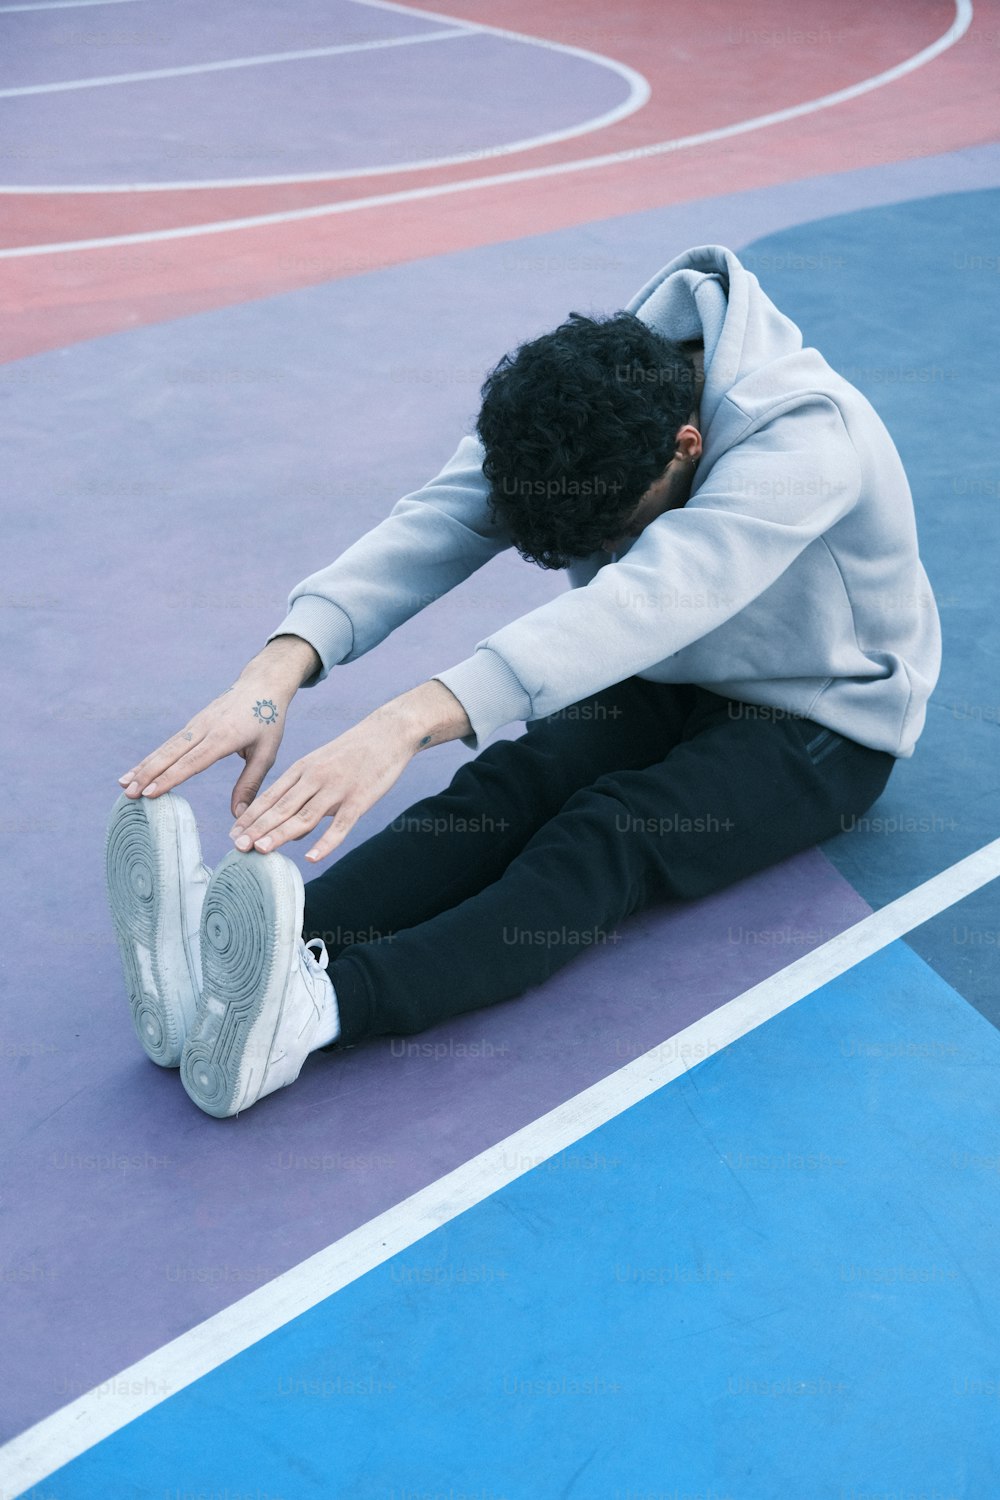 Un uomo seduto su un campo da basket con il piede a terra